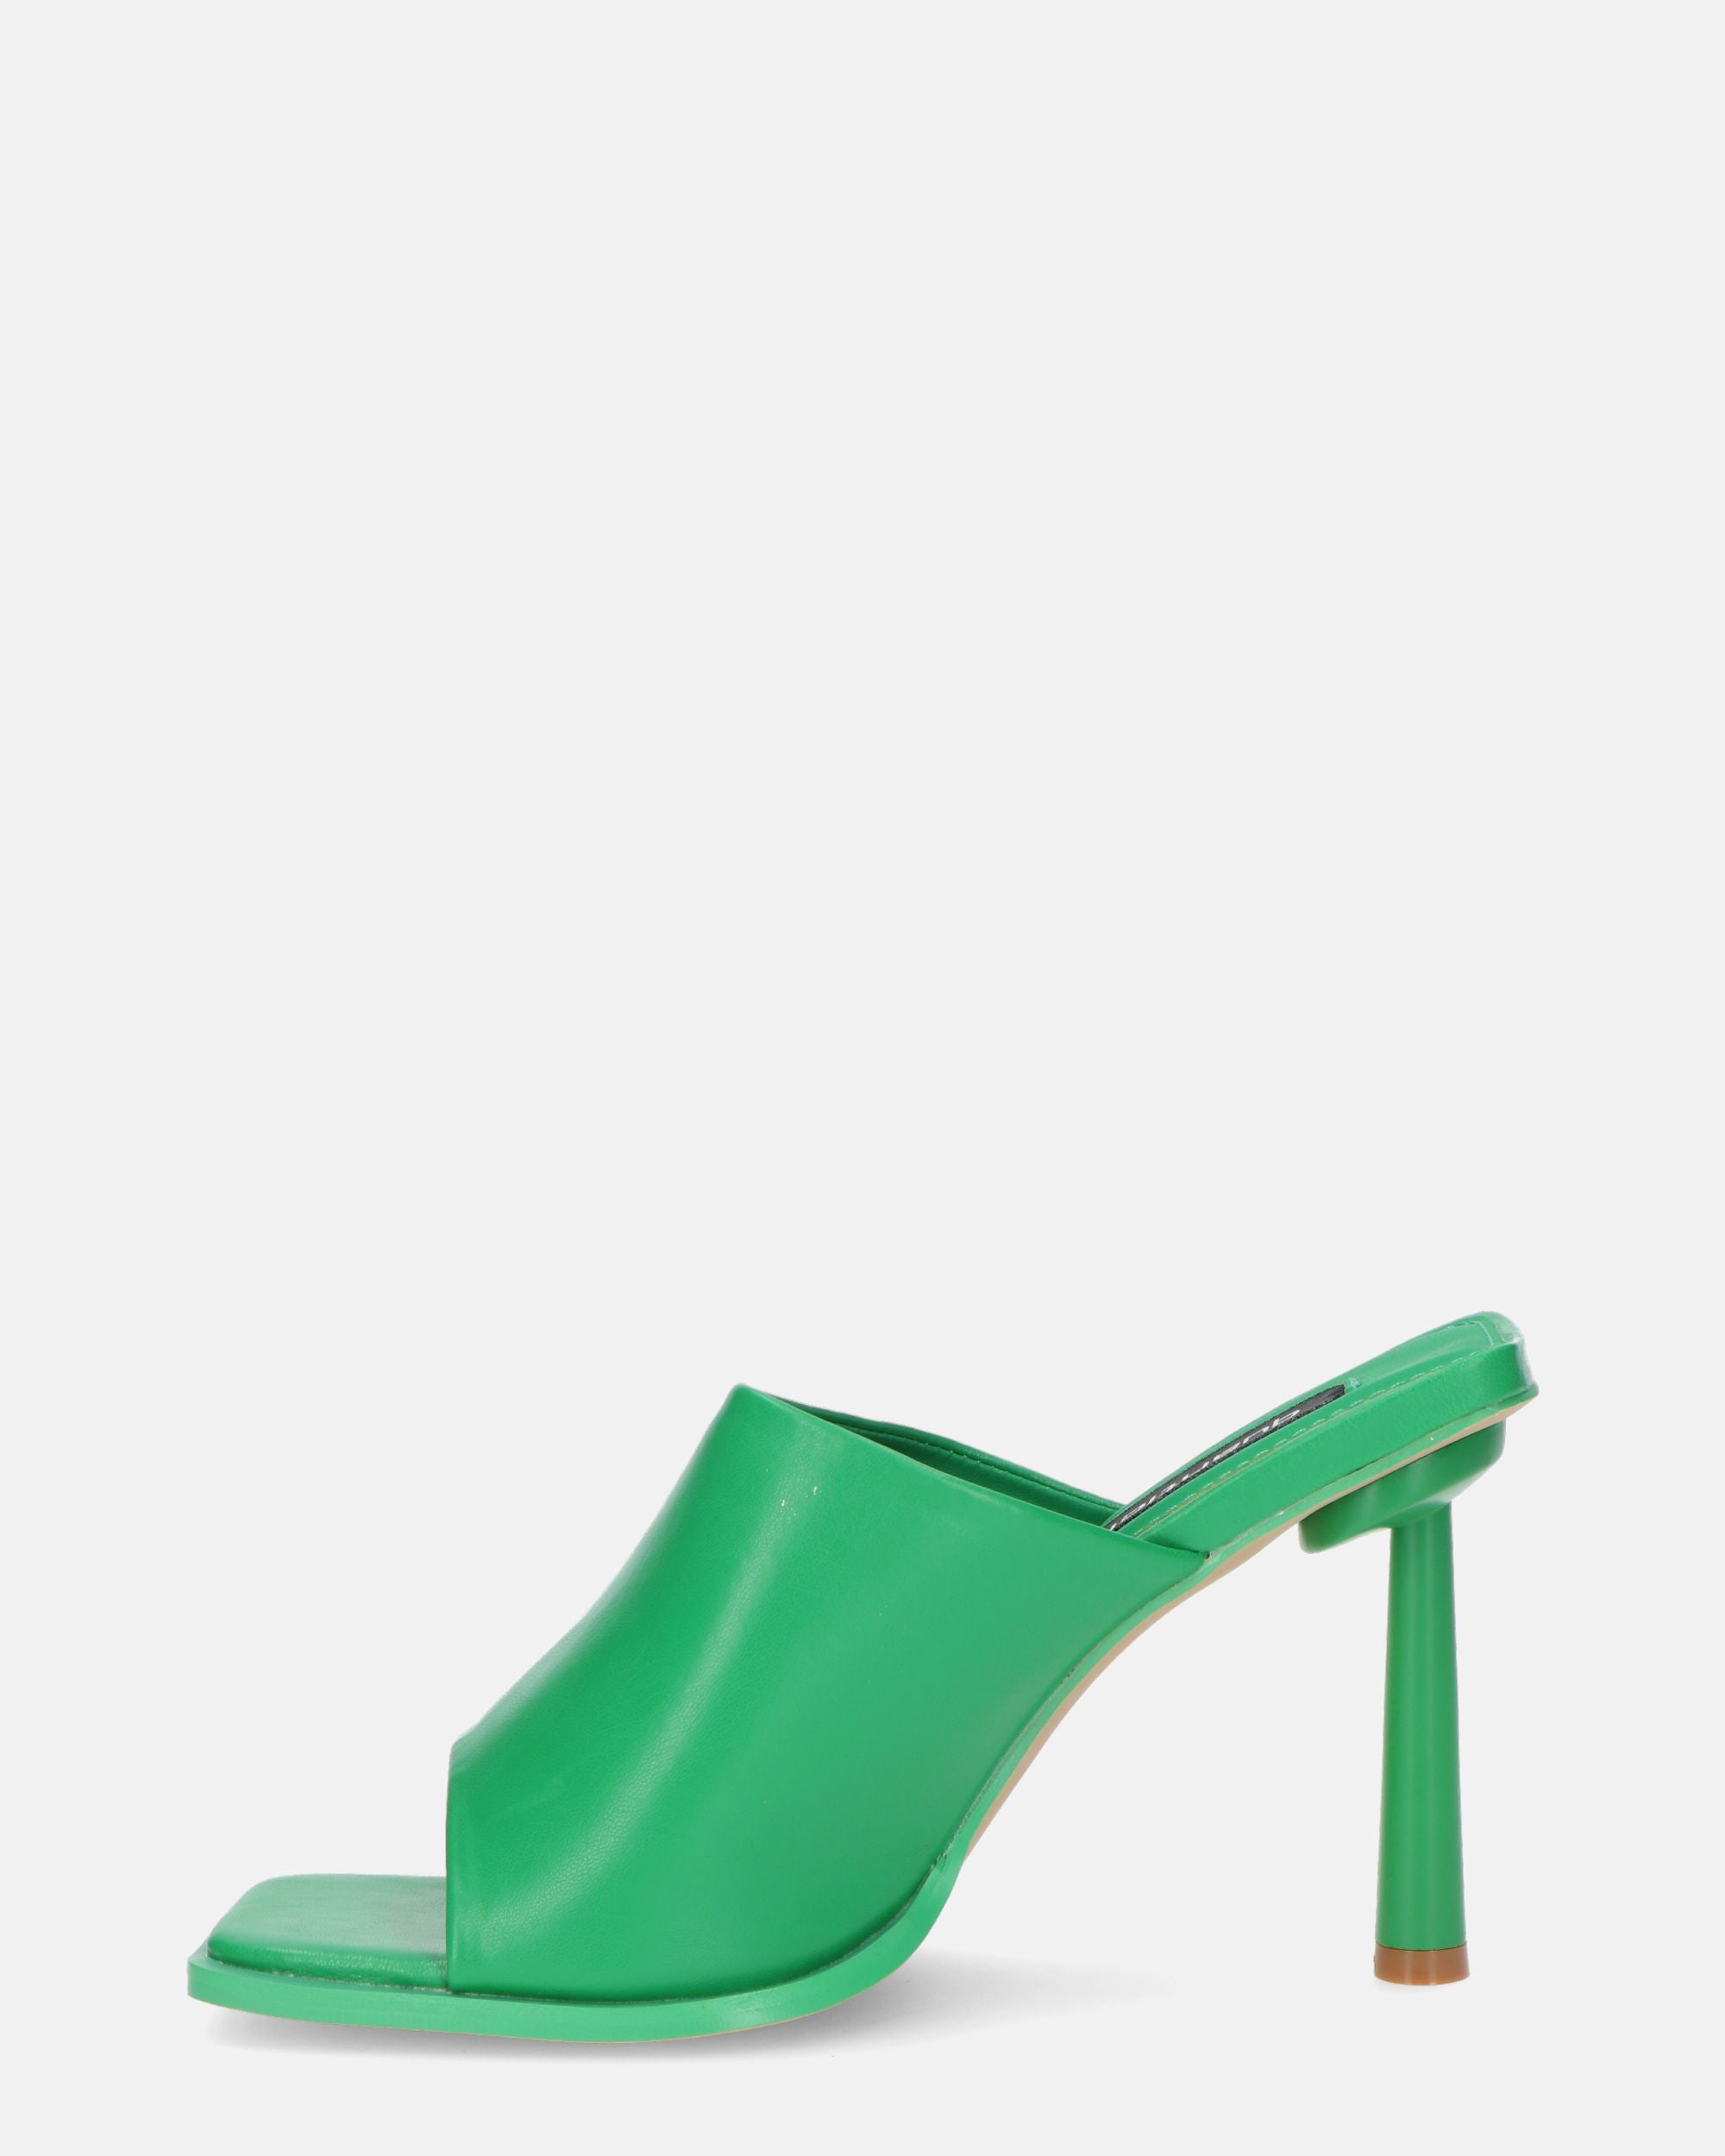 MIRANDA - green shoes with stiletto heels